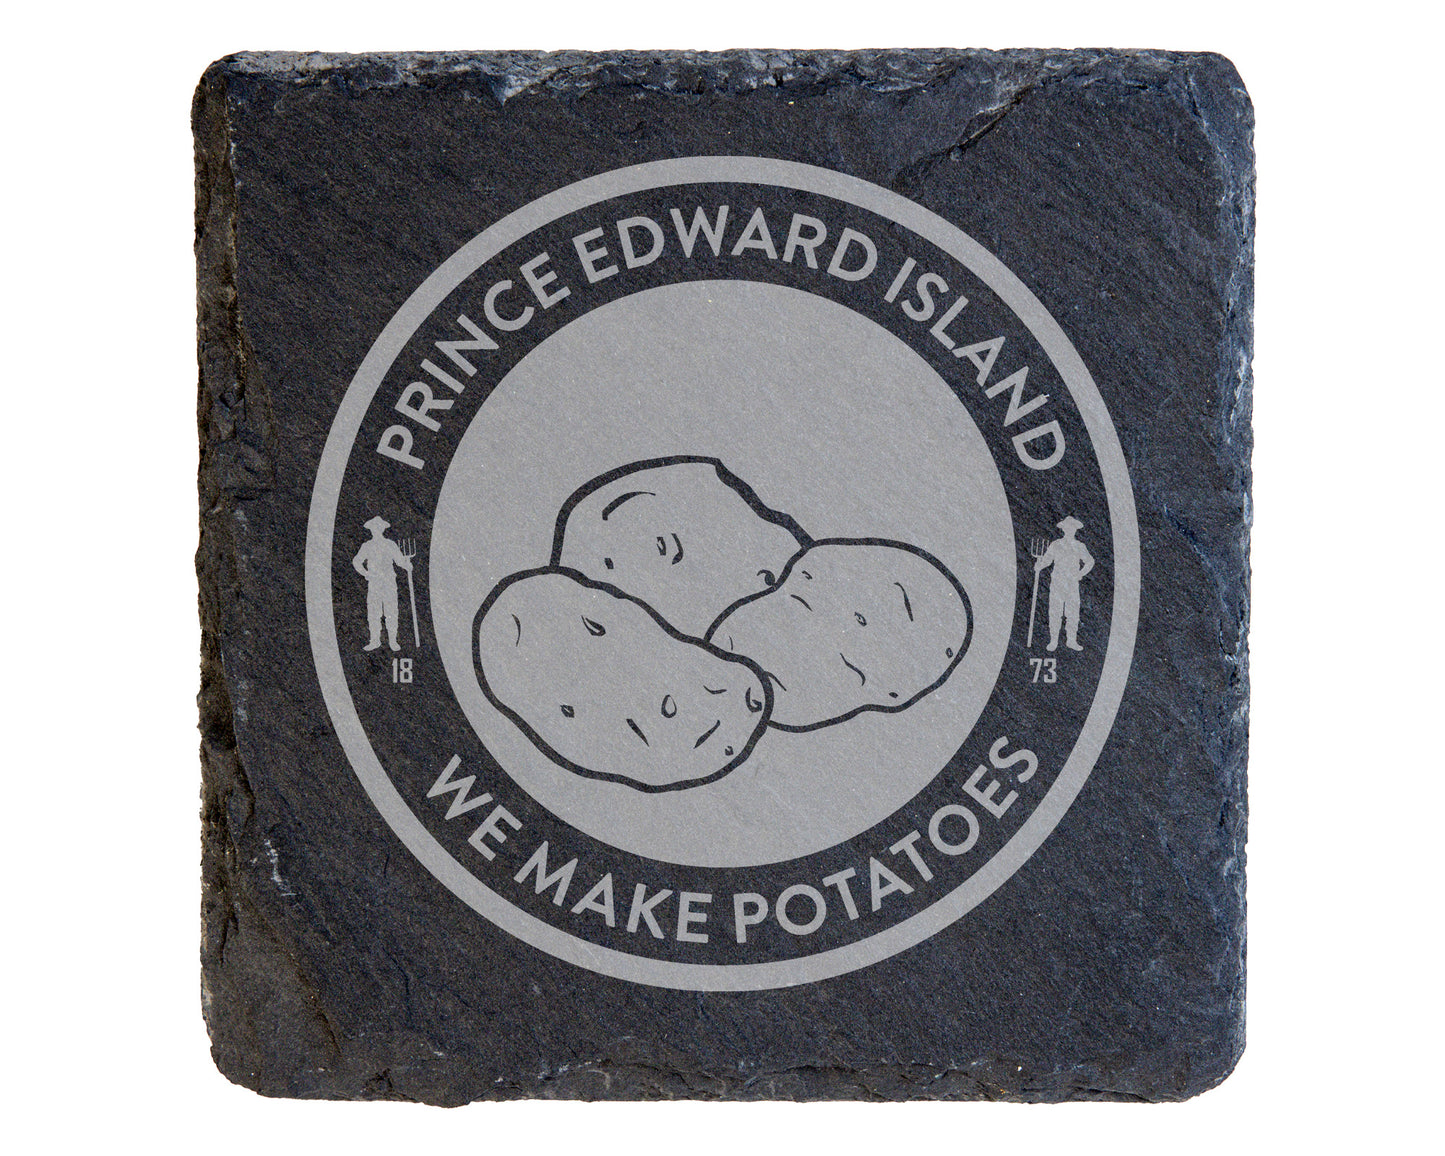 Prince Edward Island: We Make Potatoes Slate Coaster